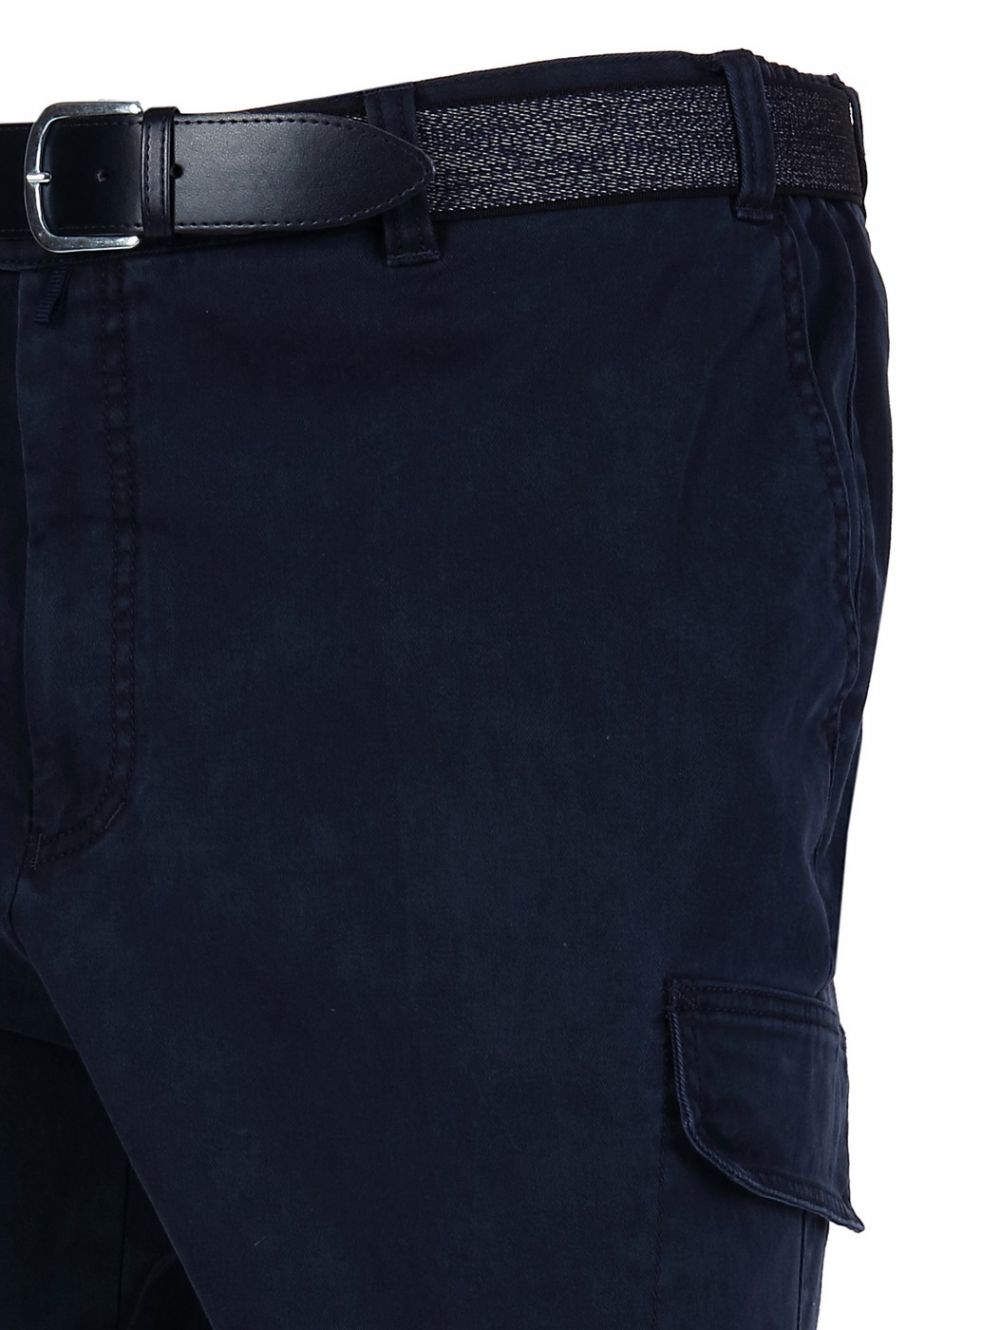 LUIGI MORINI Men's Italian blue navy classic crotch sports cargo pants ...